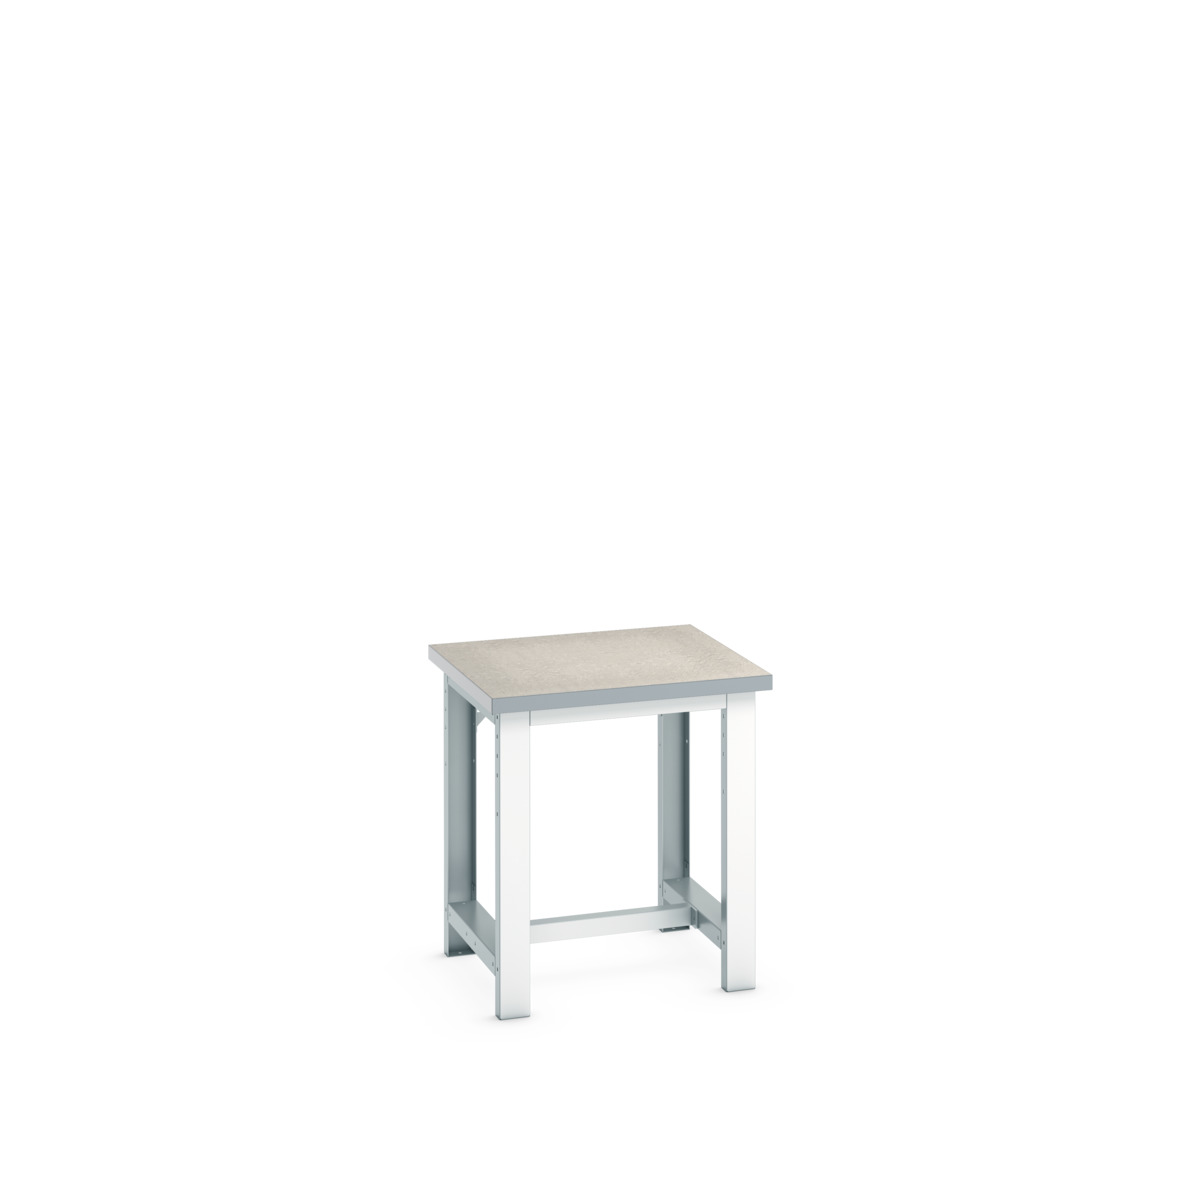 41003012. - cubio framework bench (lino)